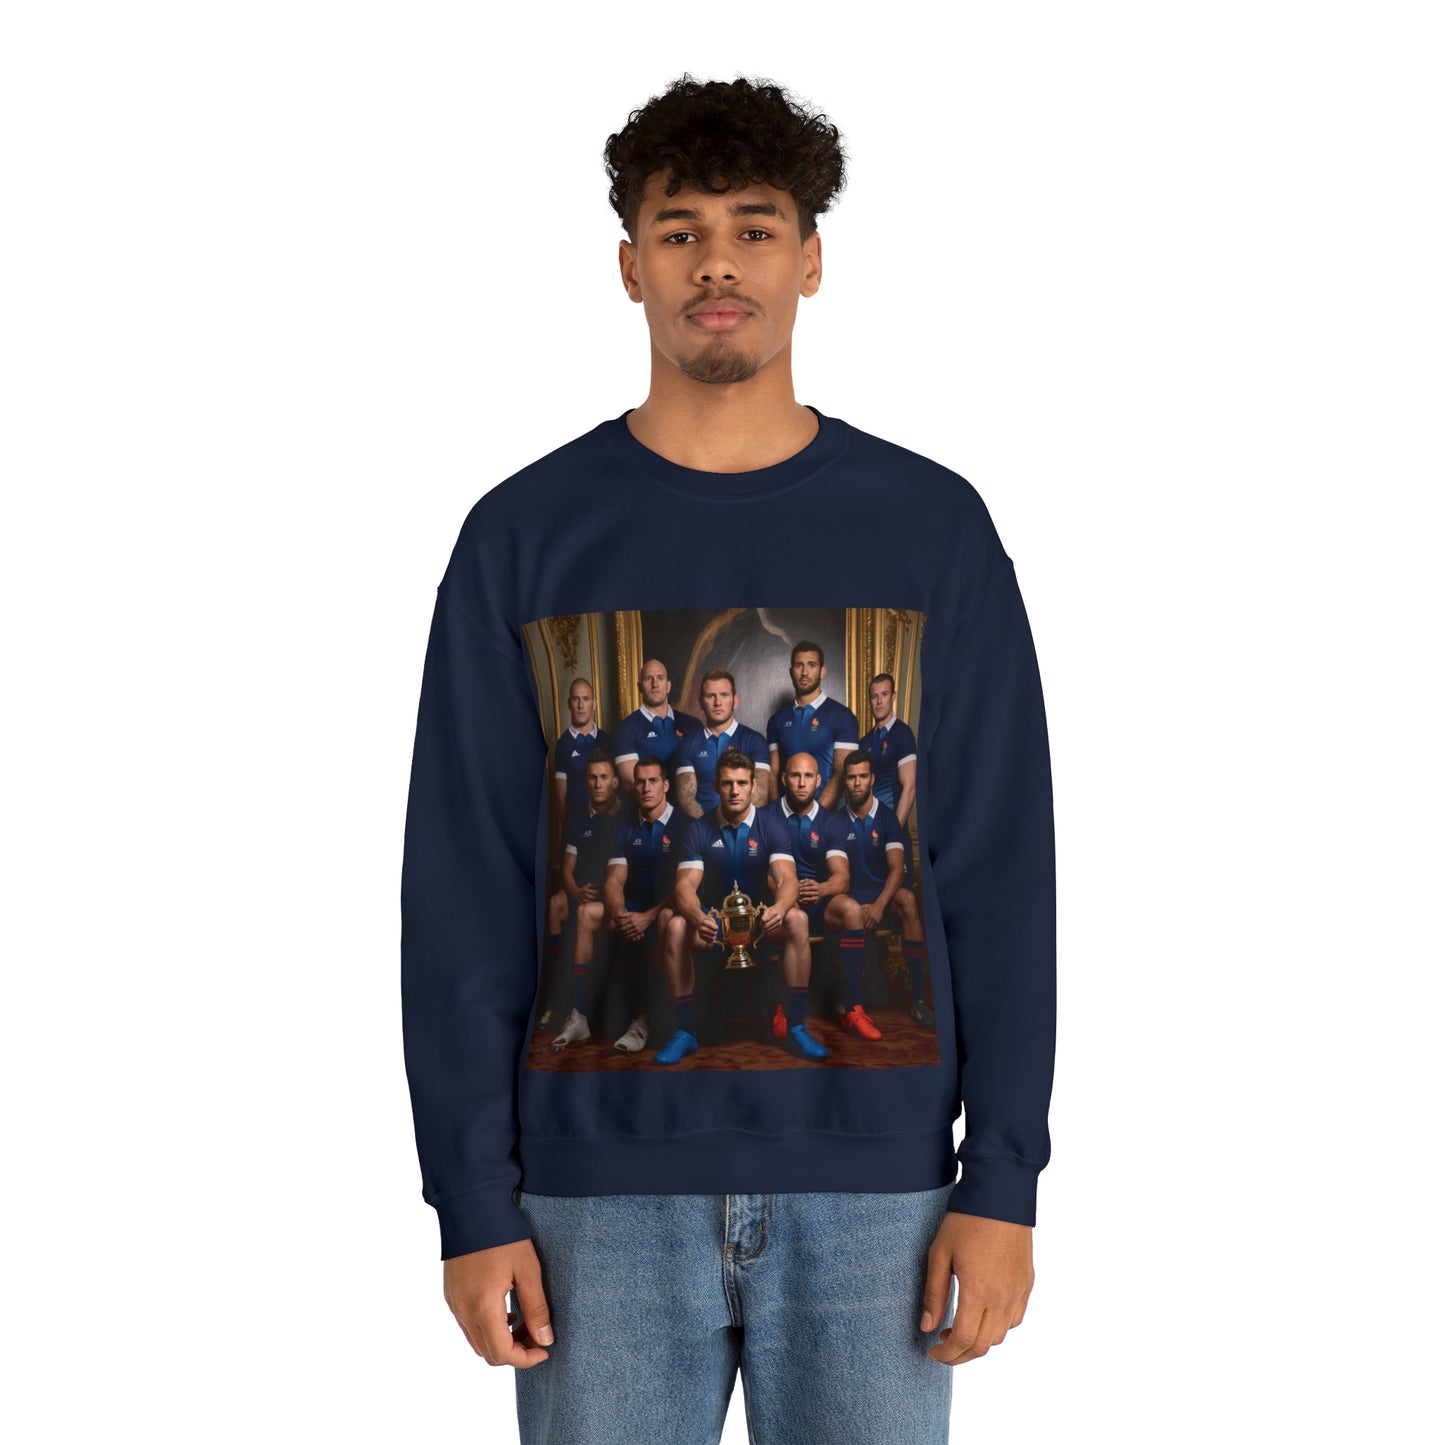 France World Cup Photoshoot - dark sweatshirts